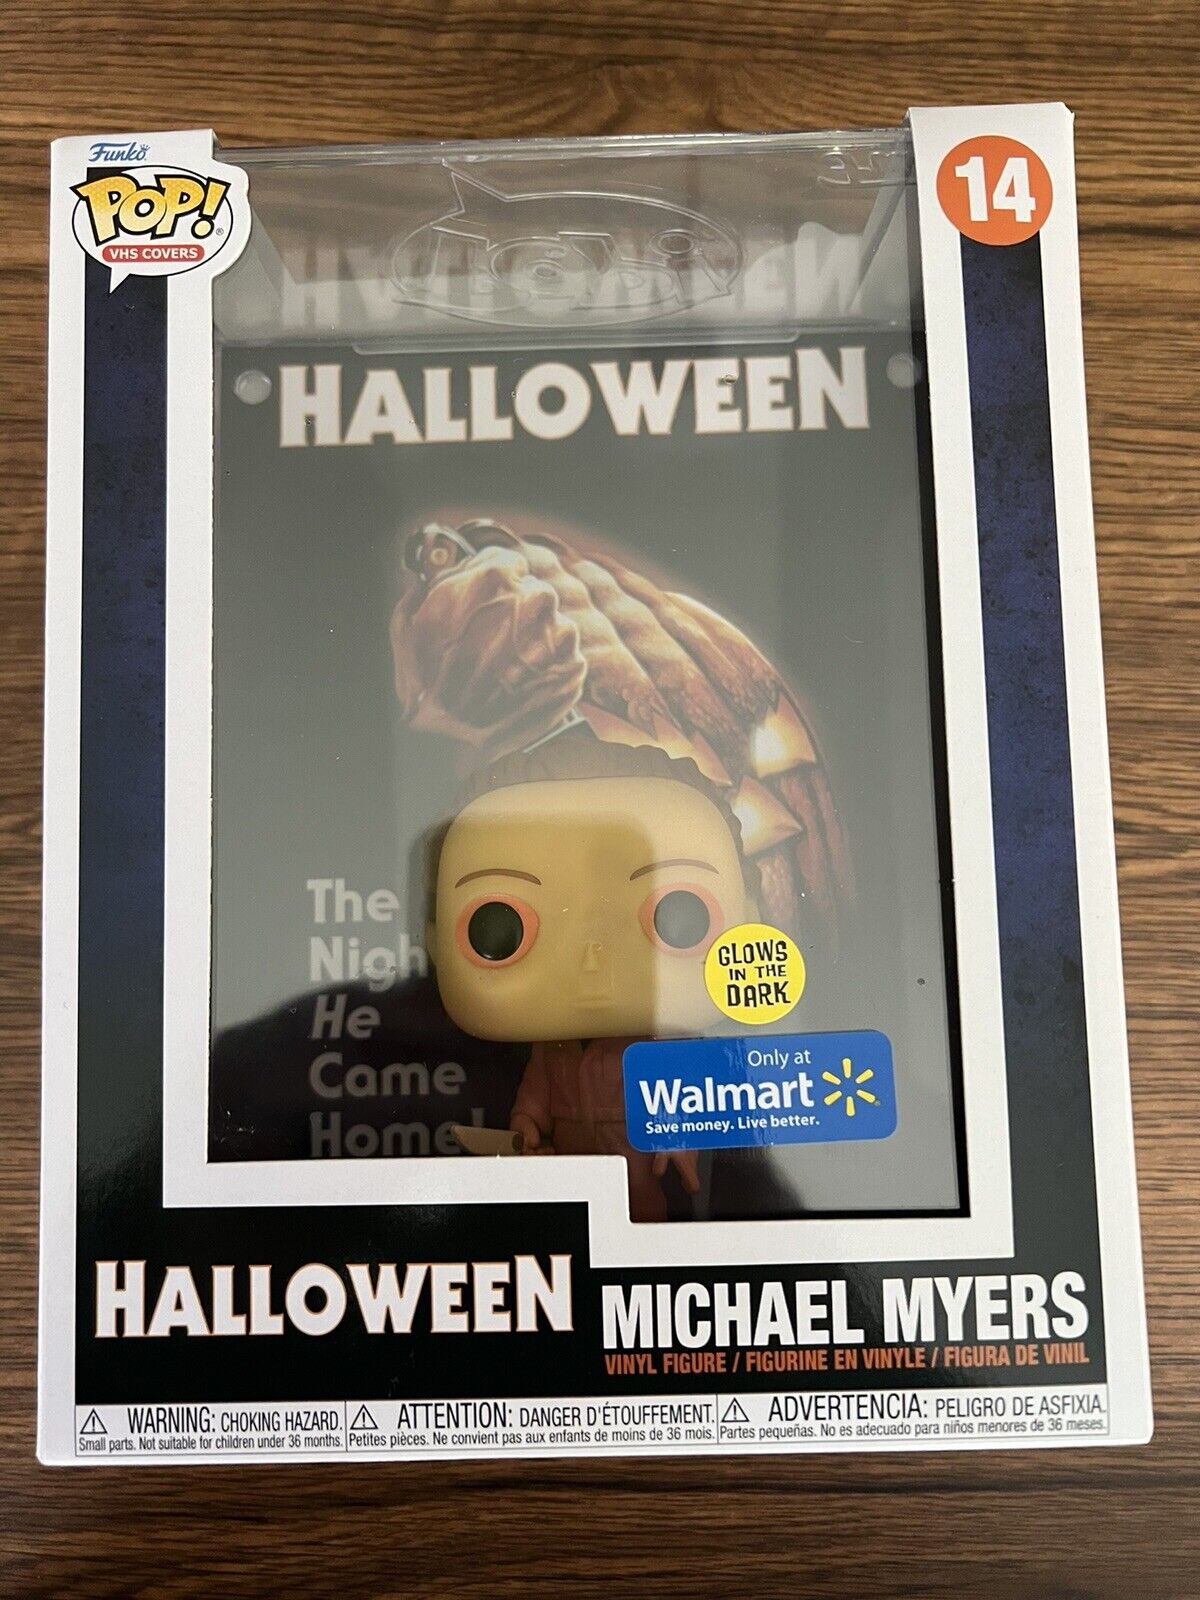 Halloween Michael Myers Funko Pop Figure Walmart #14 Glow in The Dark